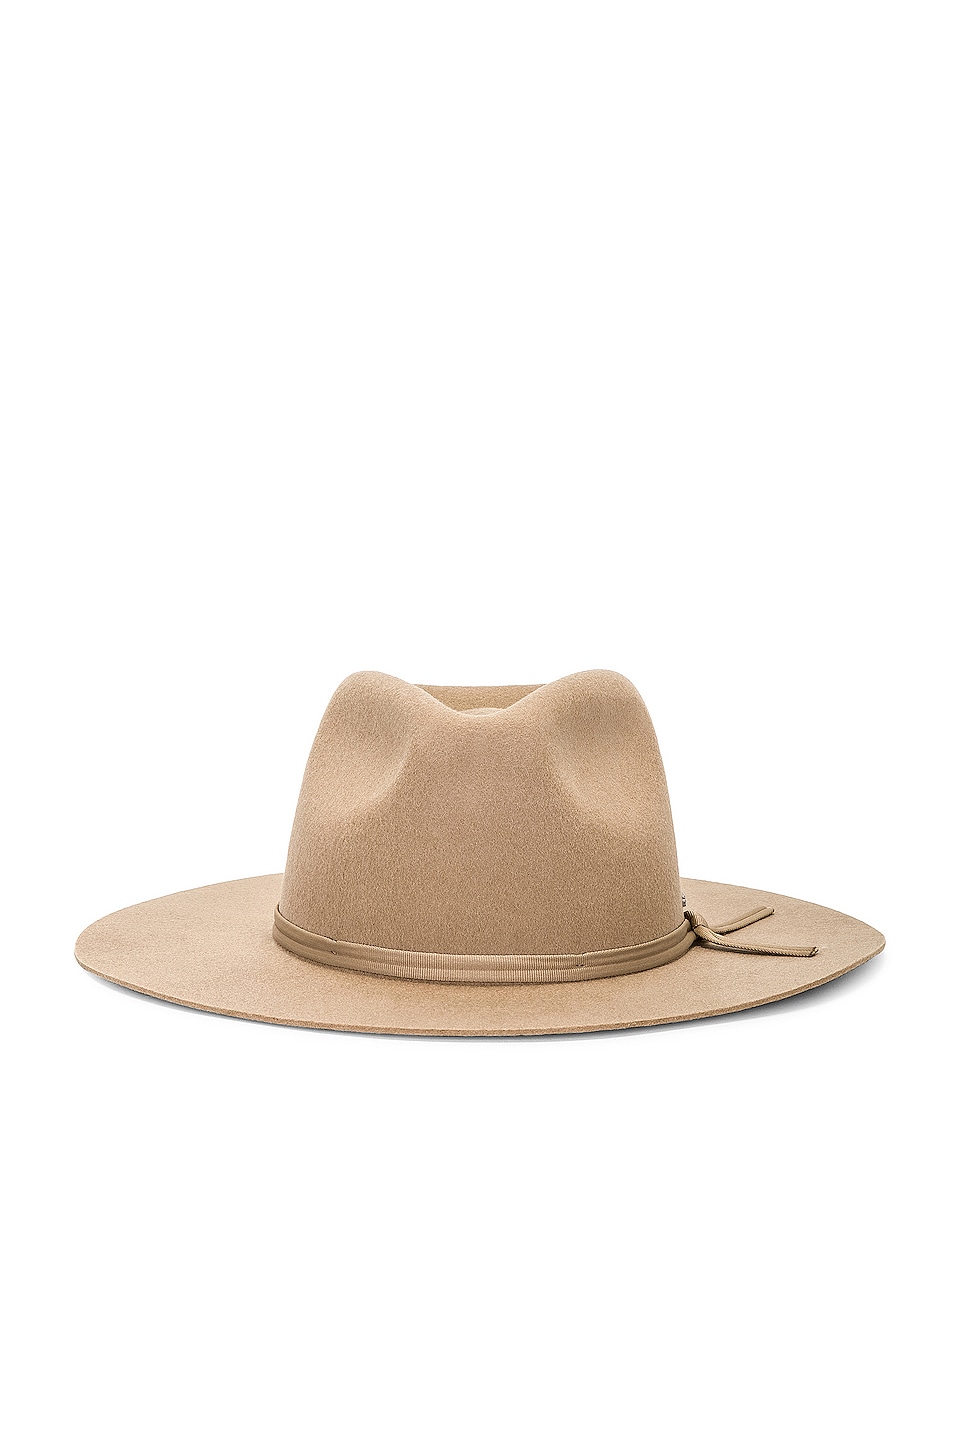 Brixton Cohen Cowboy Hat in Sand | REVOLVE